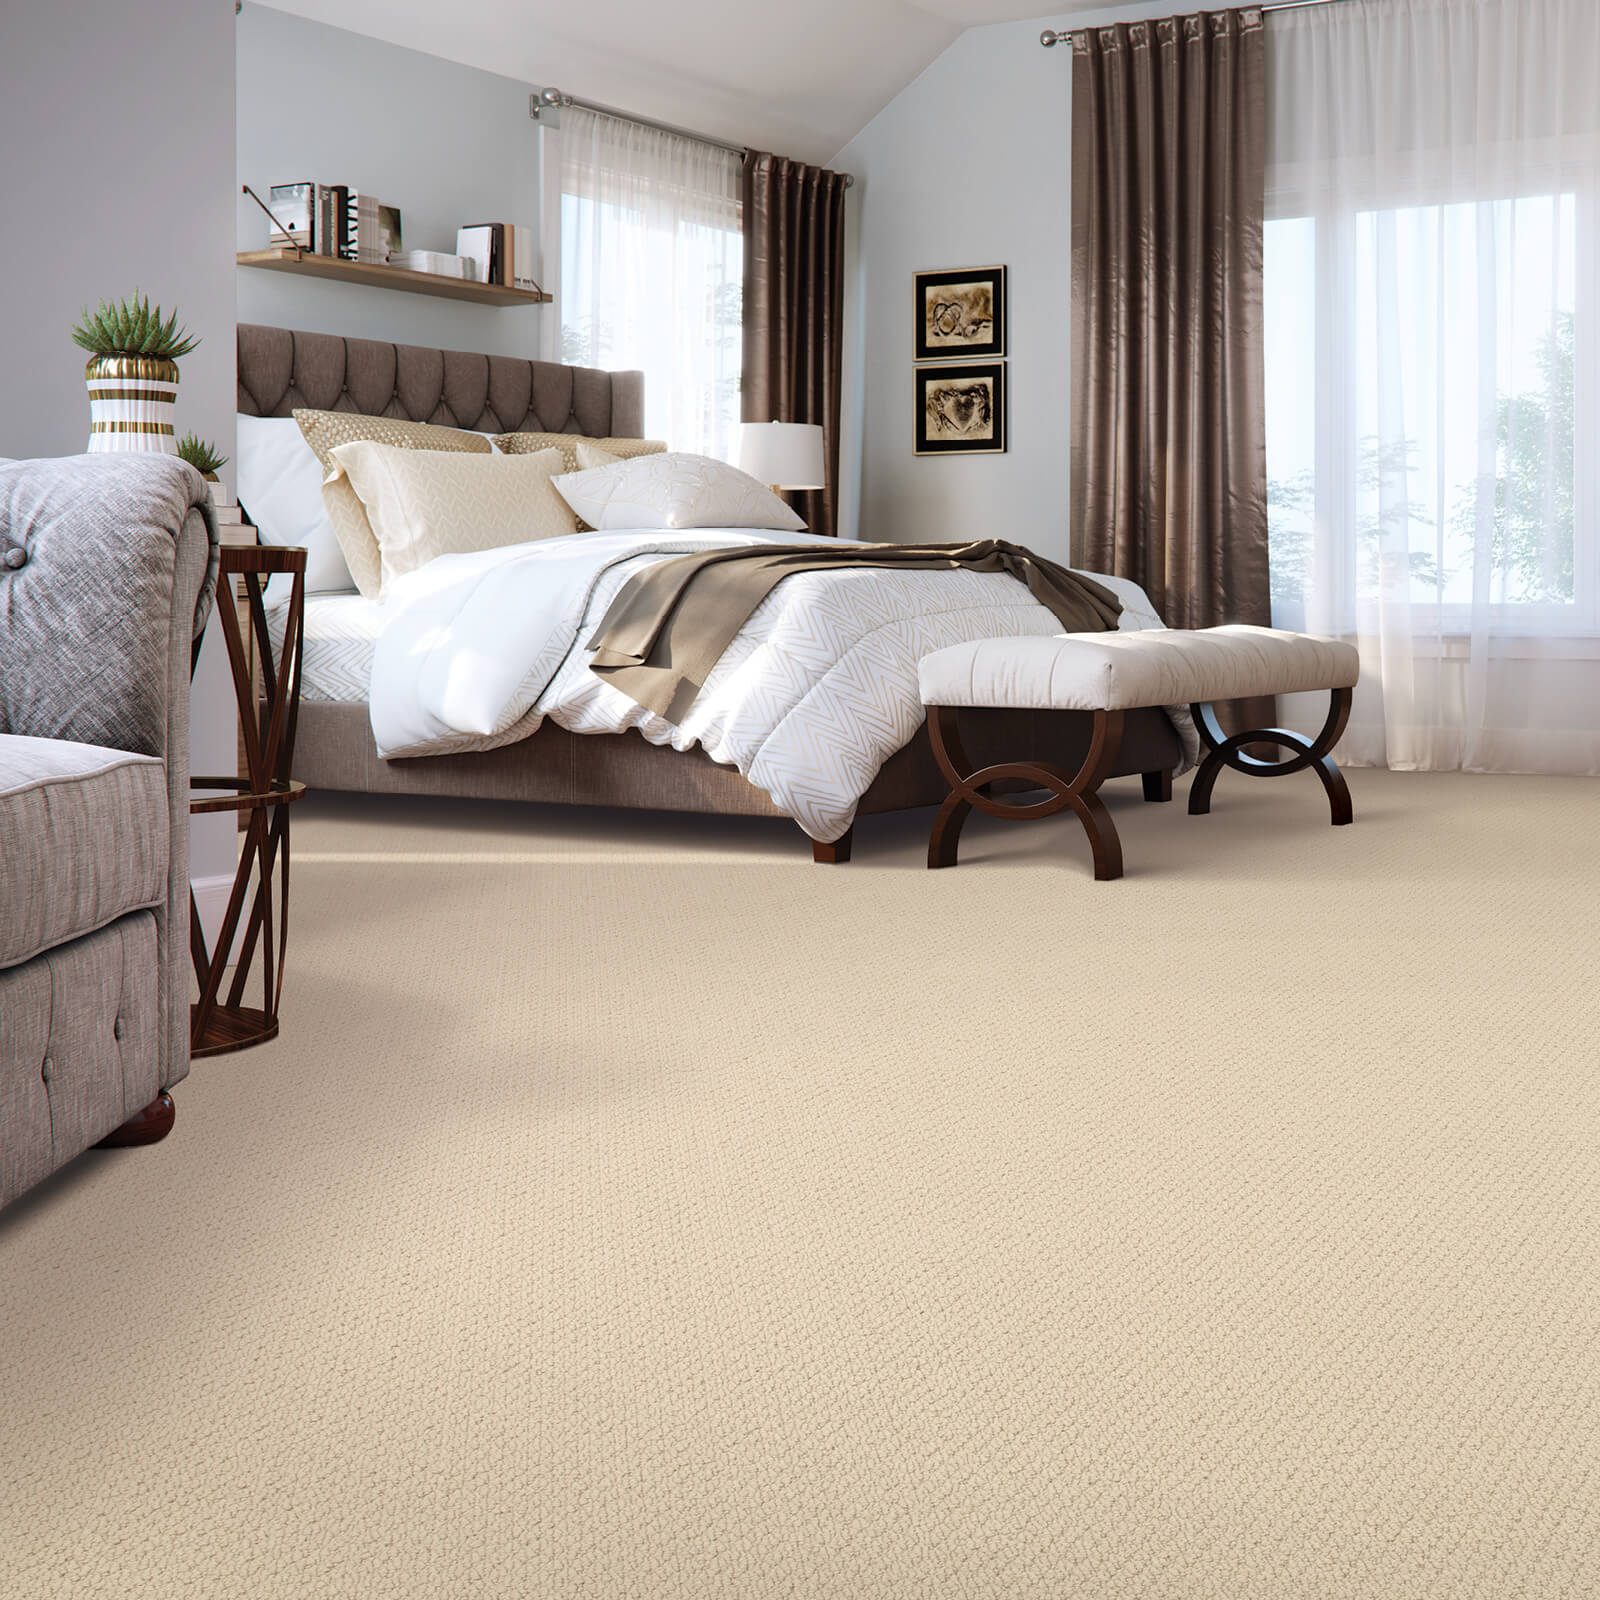 Bedroom Carpet | Wacky's Flooring